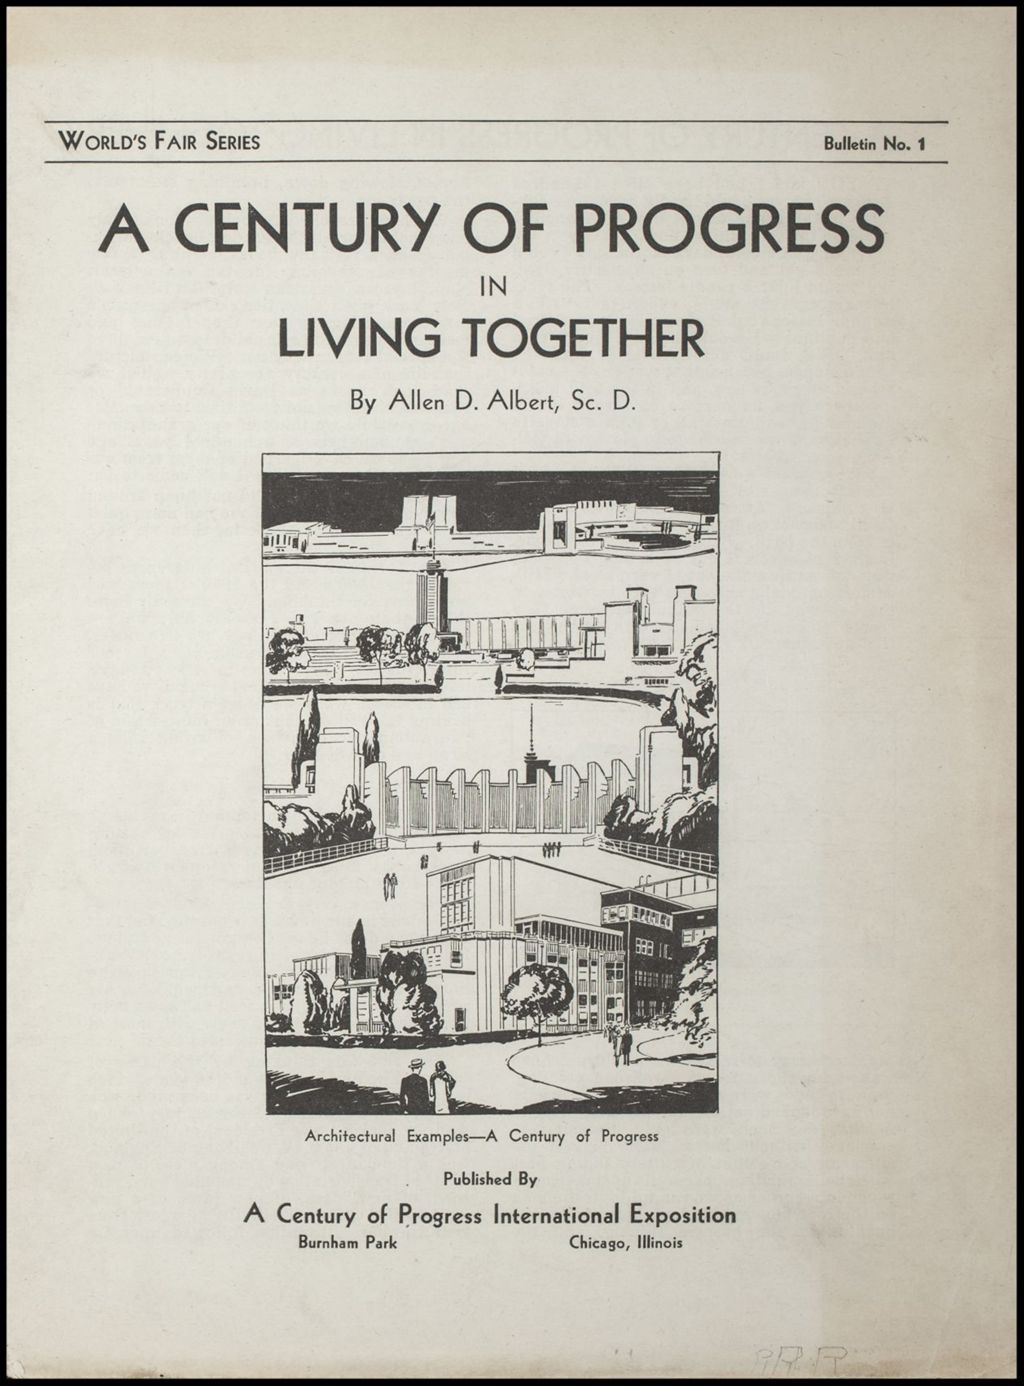 Miniature of A Century of Progress in series (Folder 16-217)